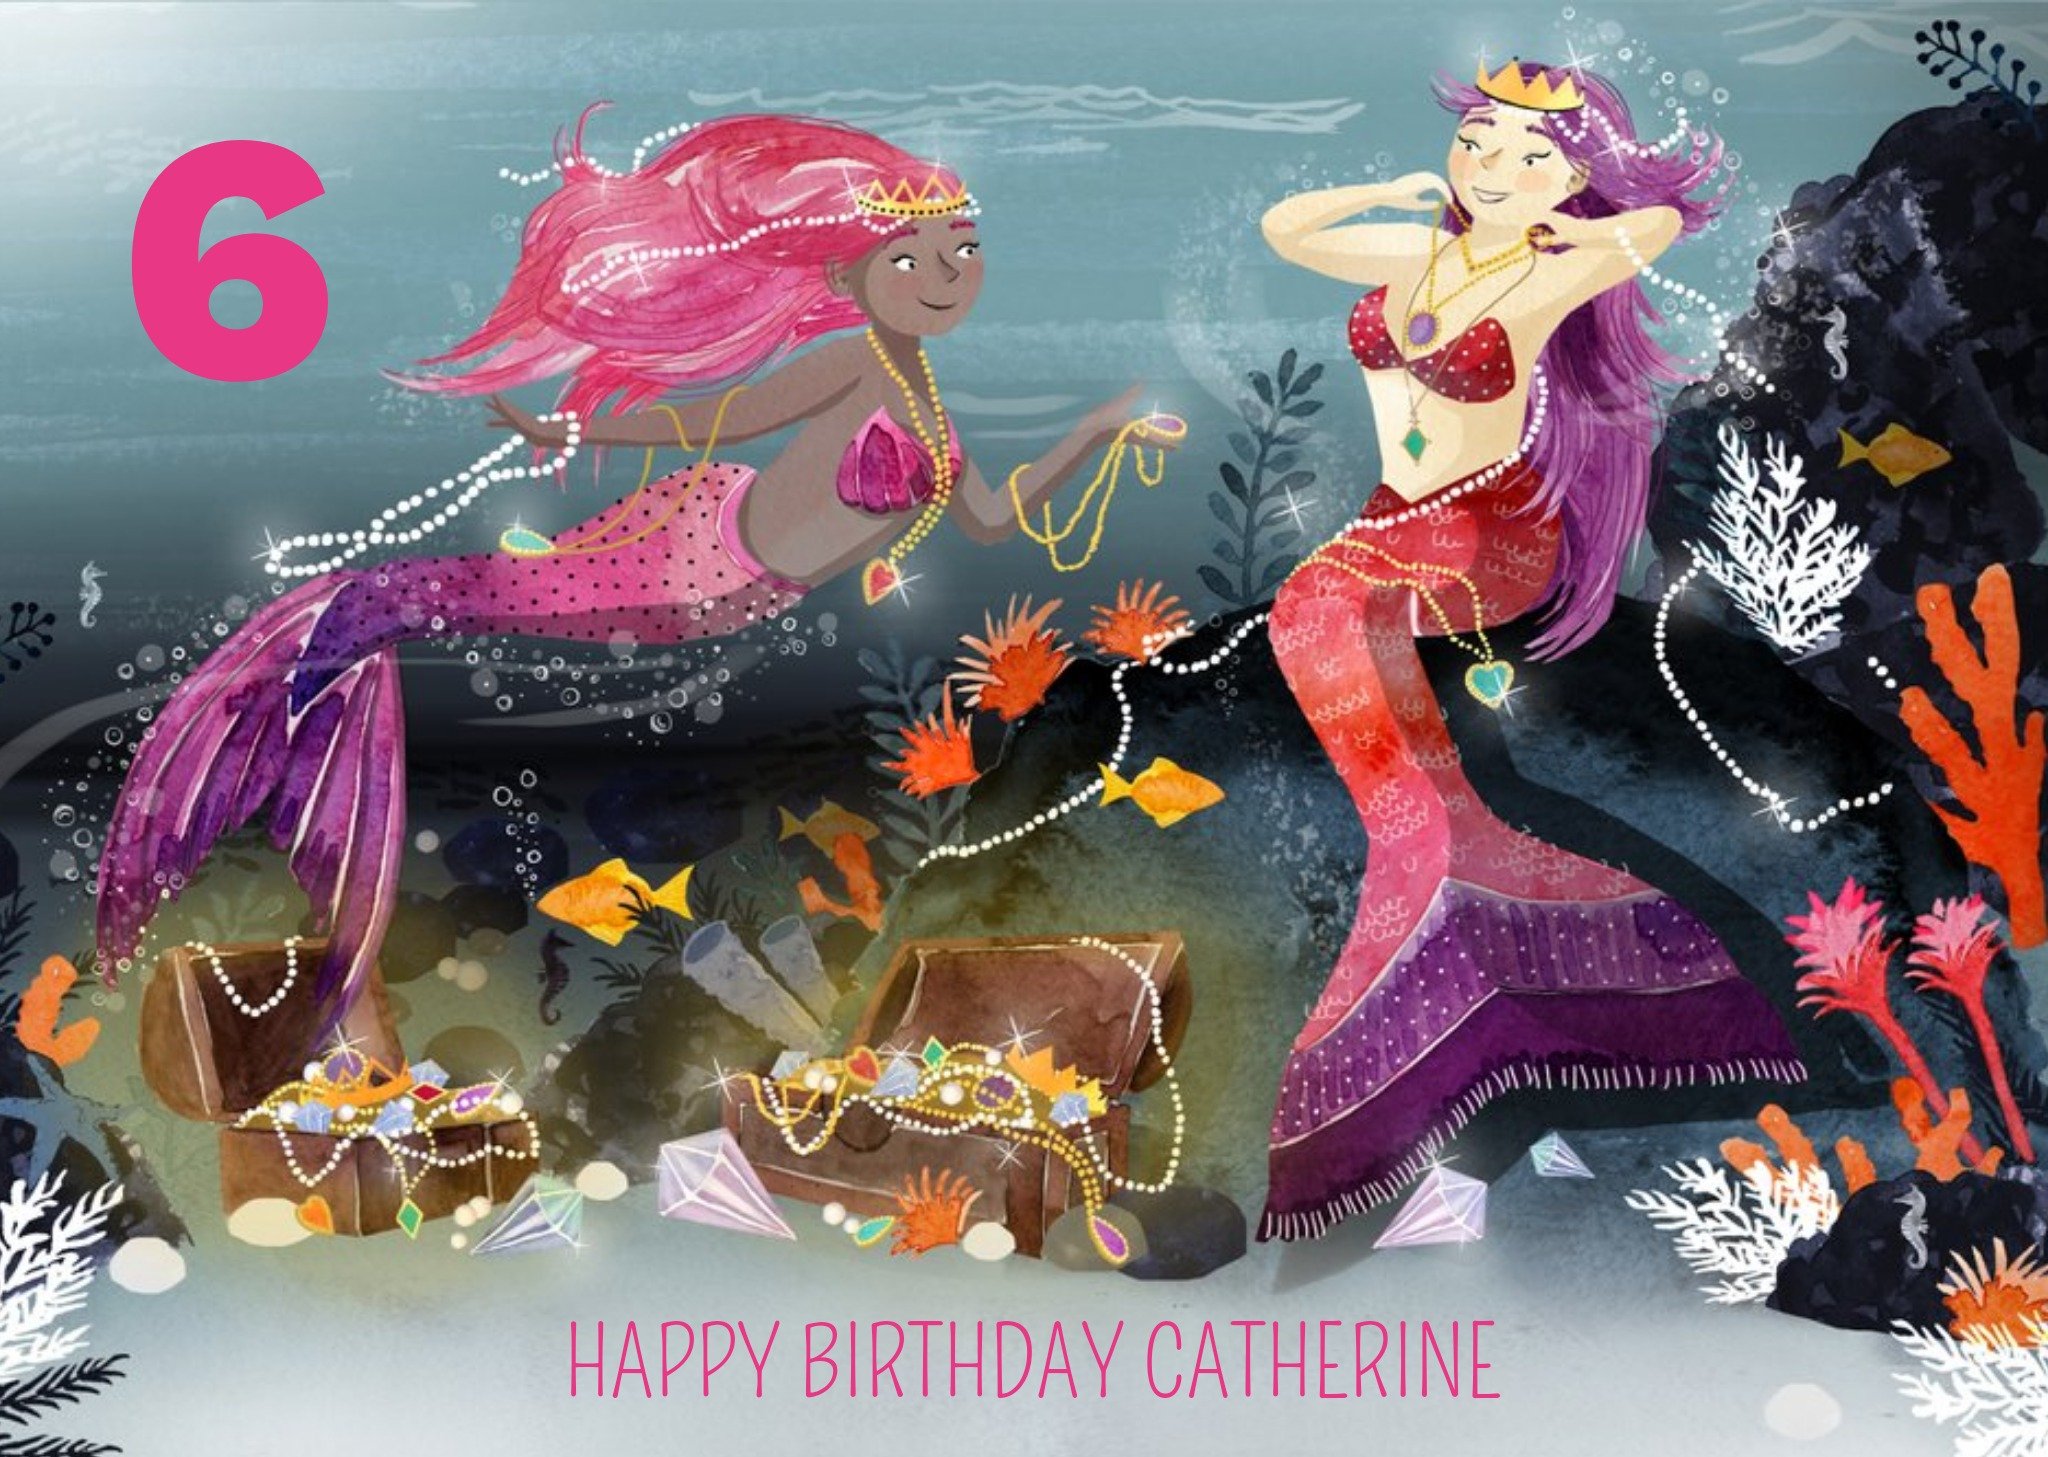 Making Meadows Okey Dokey Illustrated Mermaids 6 Today Birthday Card, Large